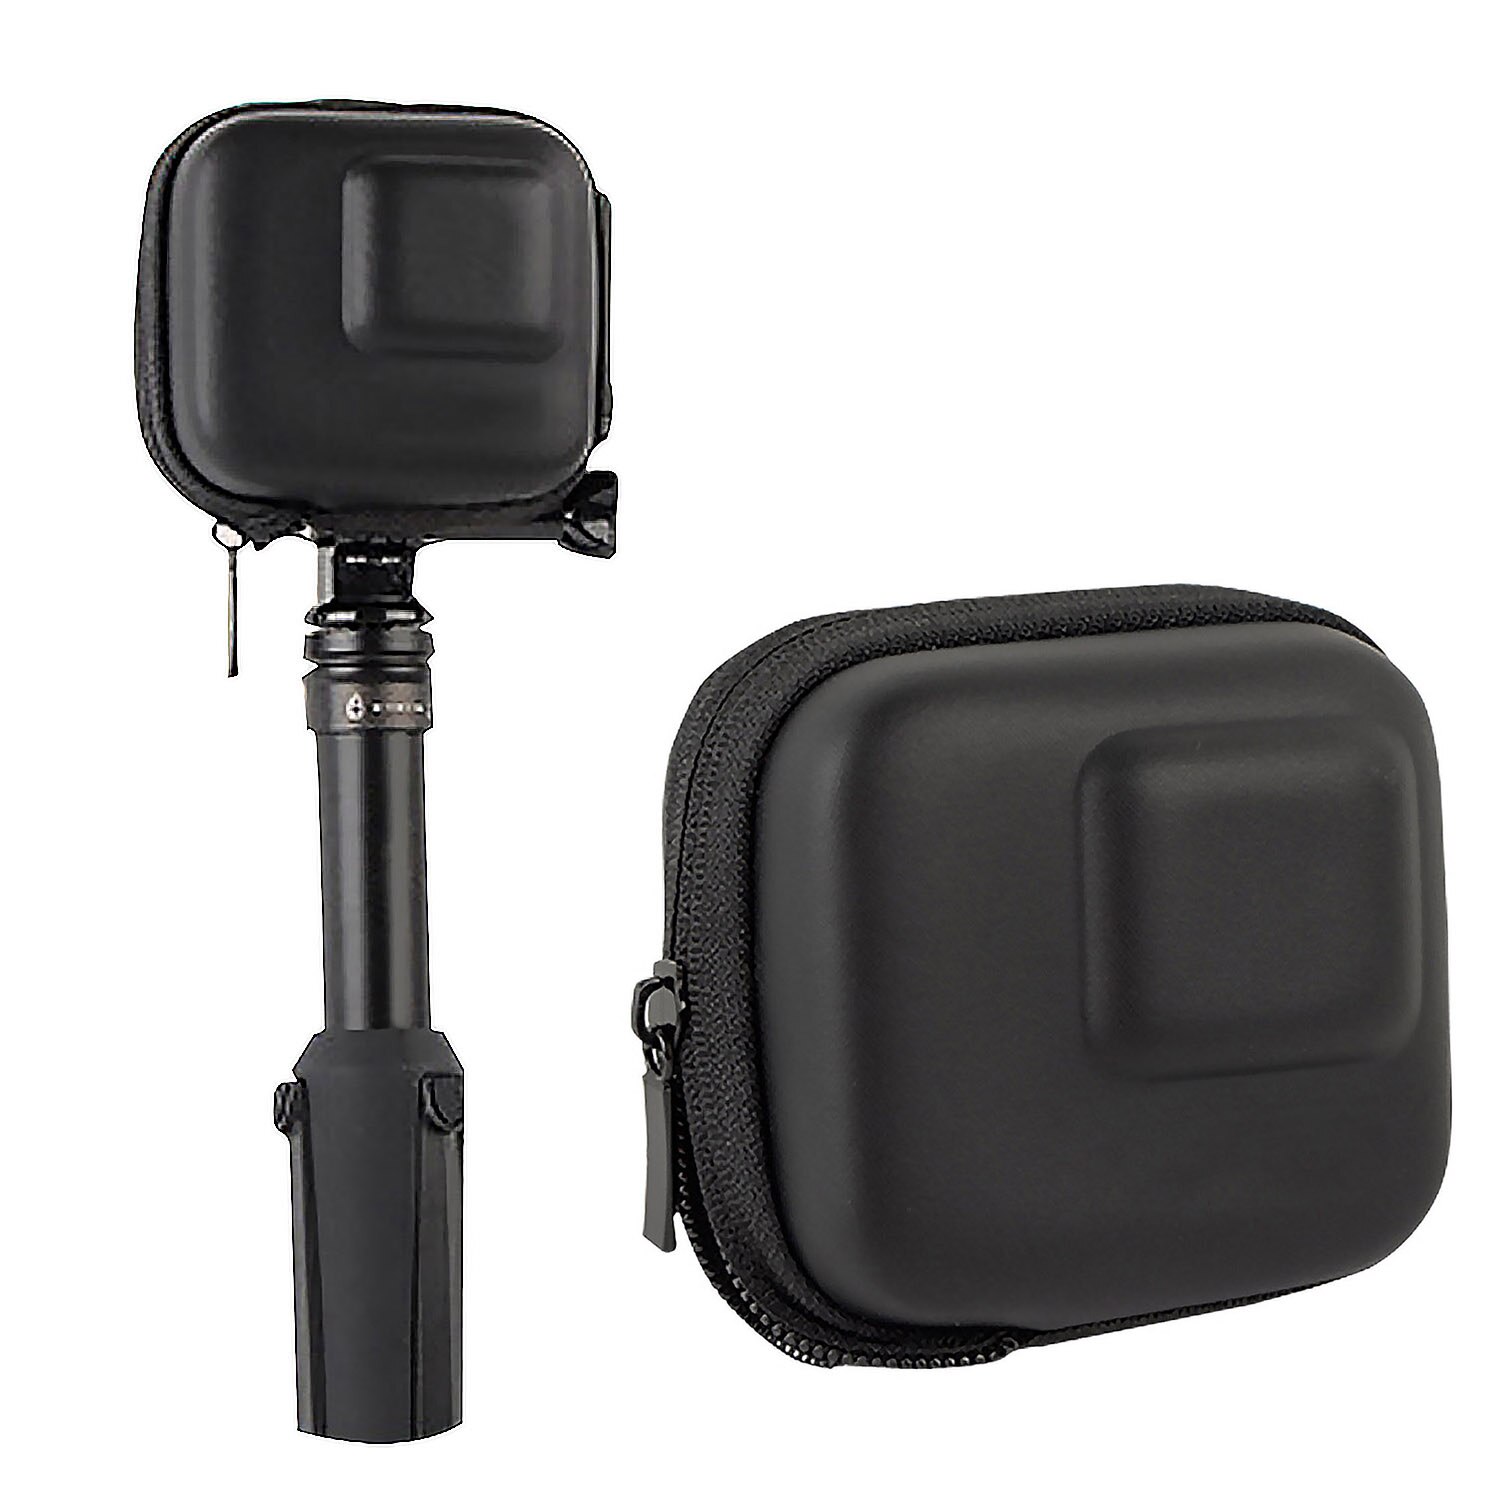 Gosear Mode EVA Hard Shell Beschermende Carry Case Cover Waterdichte Schokbestendige Tas voor Gopro Go Pro Hero 7 6 5 camera Accessoire